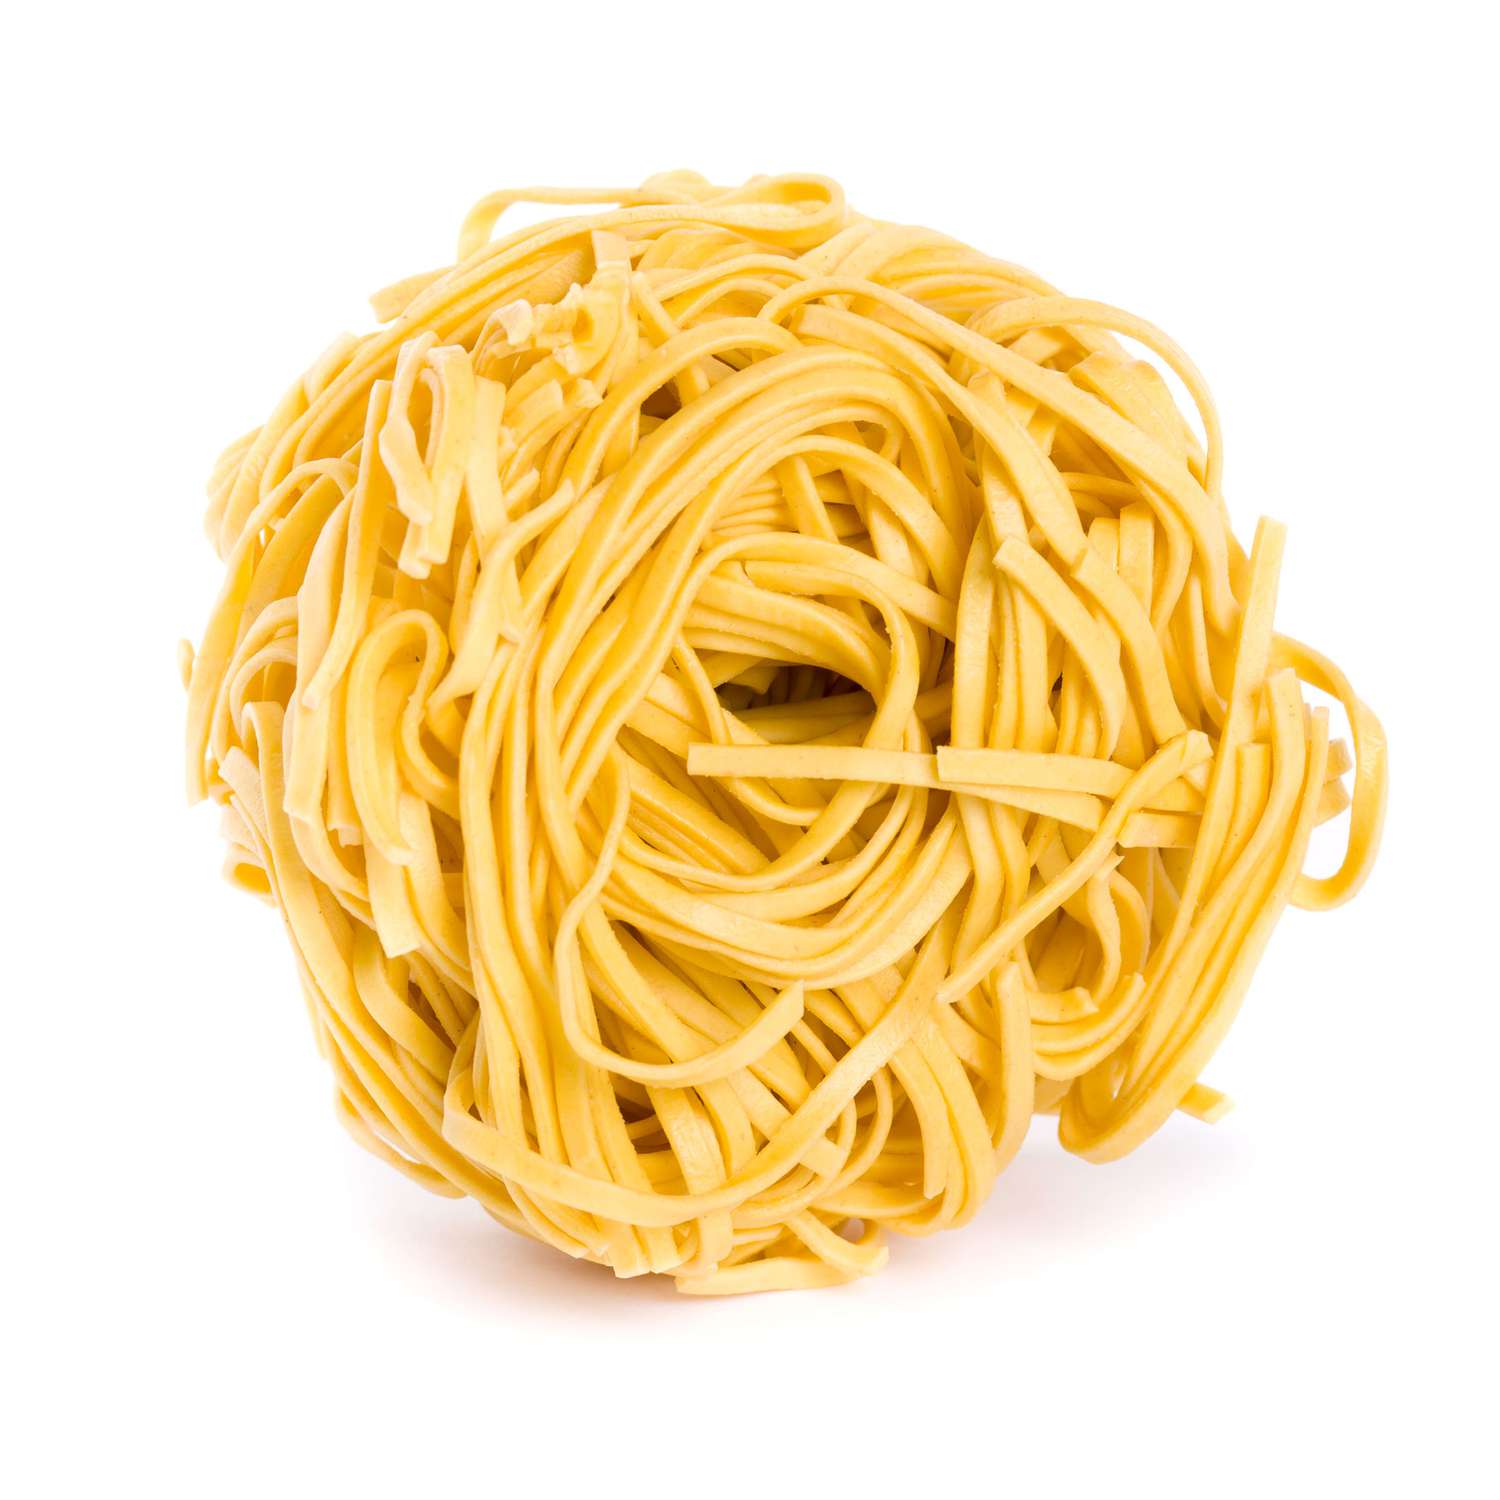 Types of pasta noodles - fettuccine